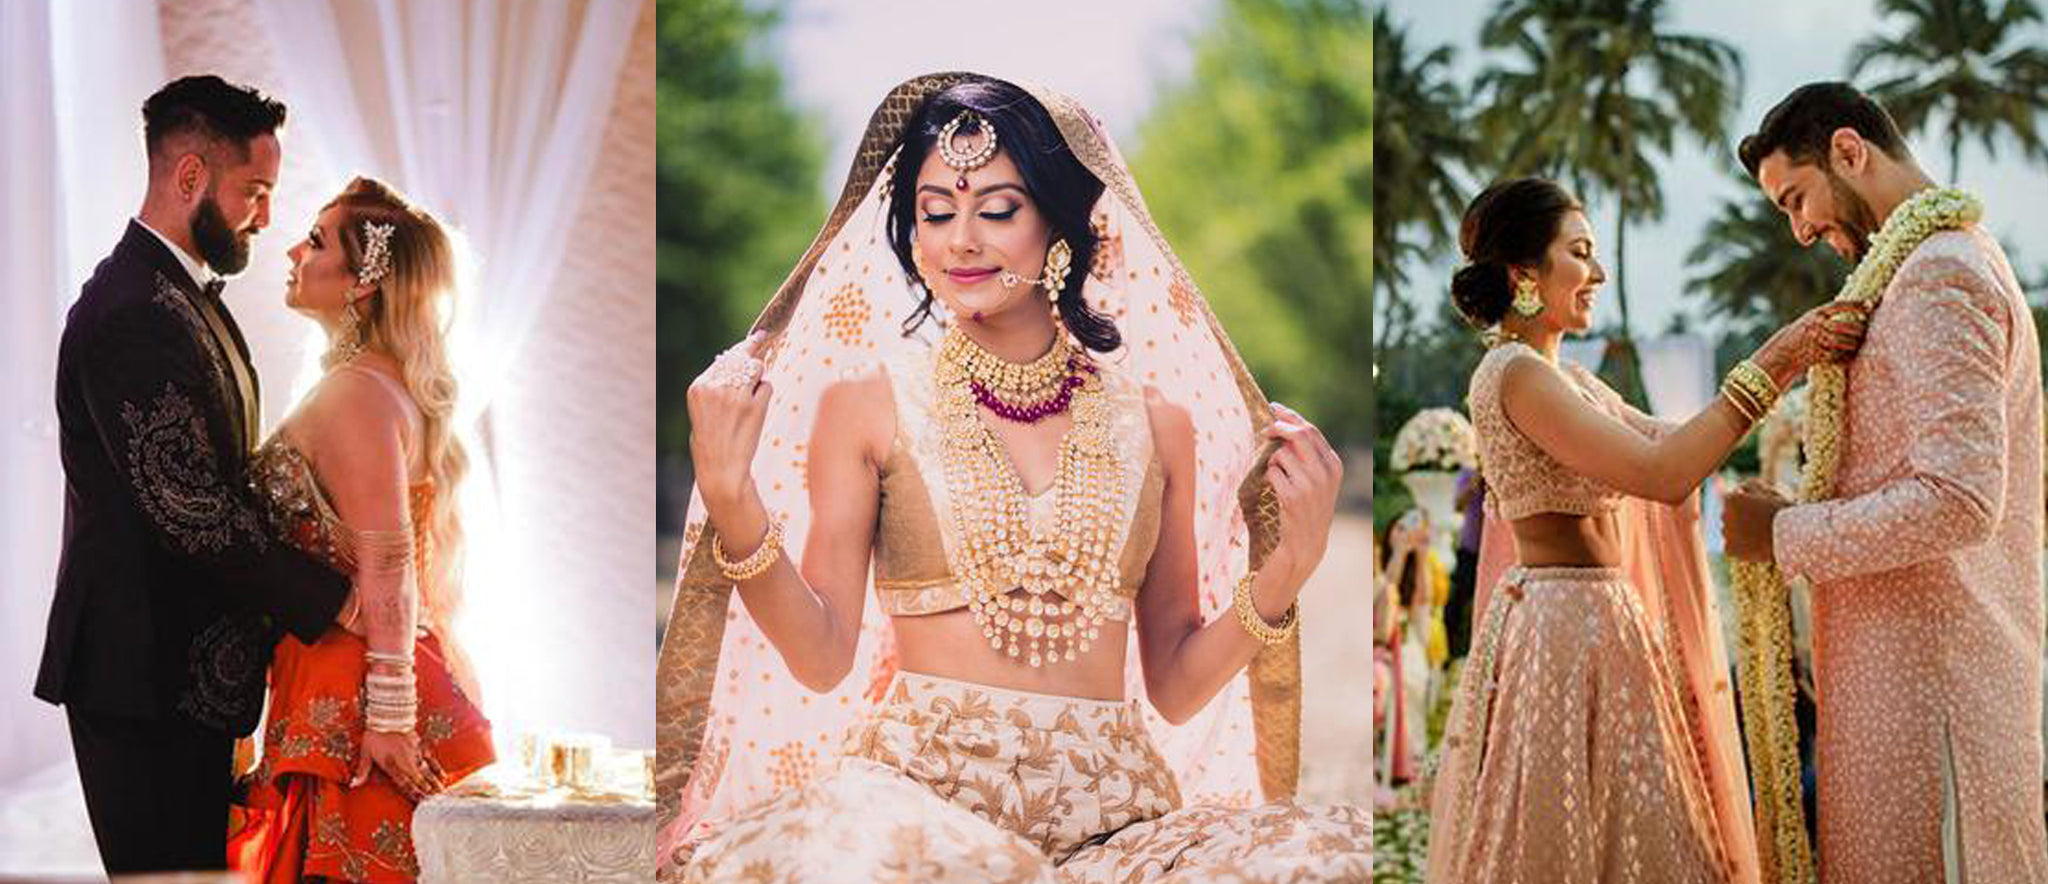 Indian wedding reception portrait in San Jose, CA Sikh Wedding by Wedding  Document… | Indian wedding poses, Indian wedding photography couples,  Wedding couple poses